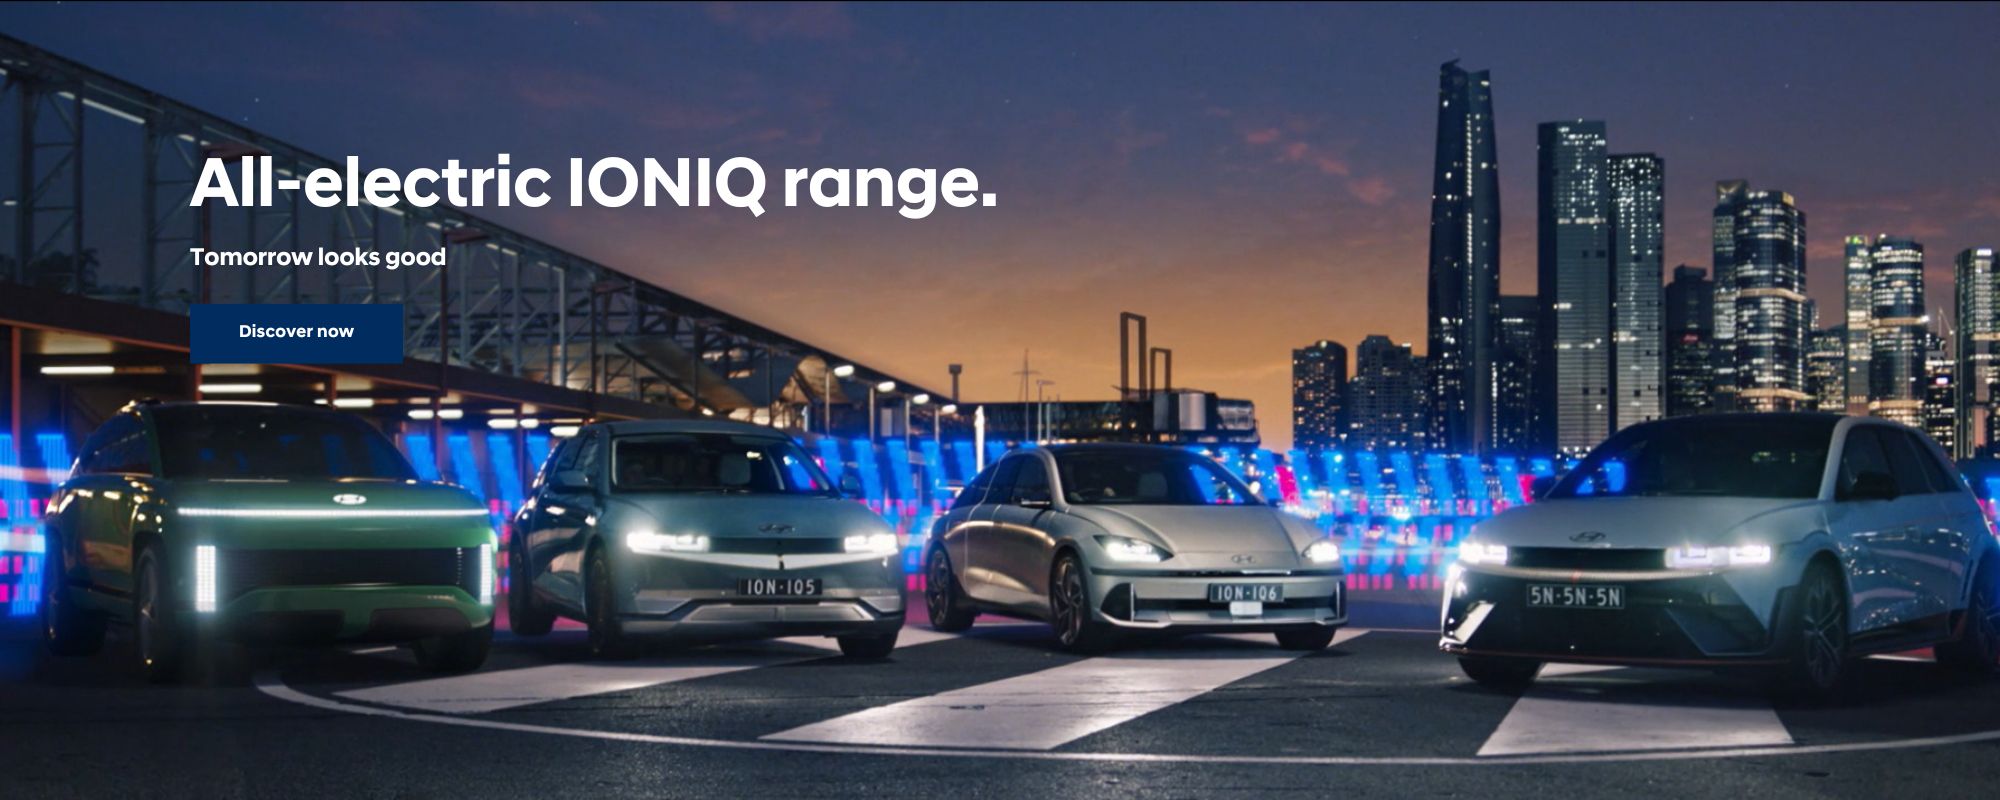 All-electric IONIQ range. Tomorrow looks good. Discover now.